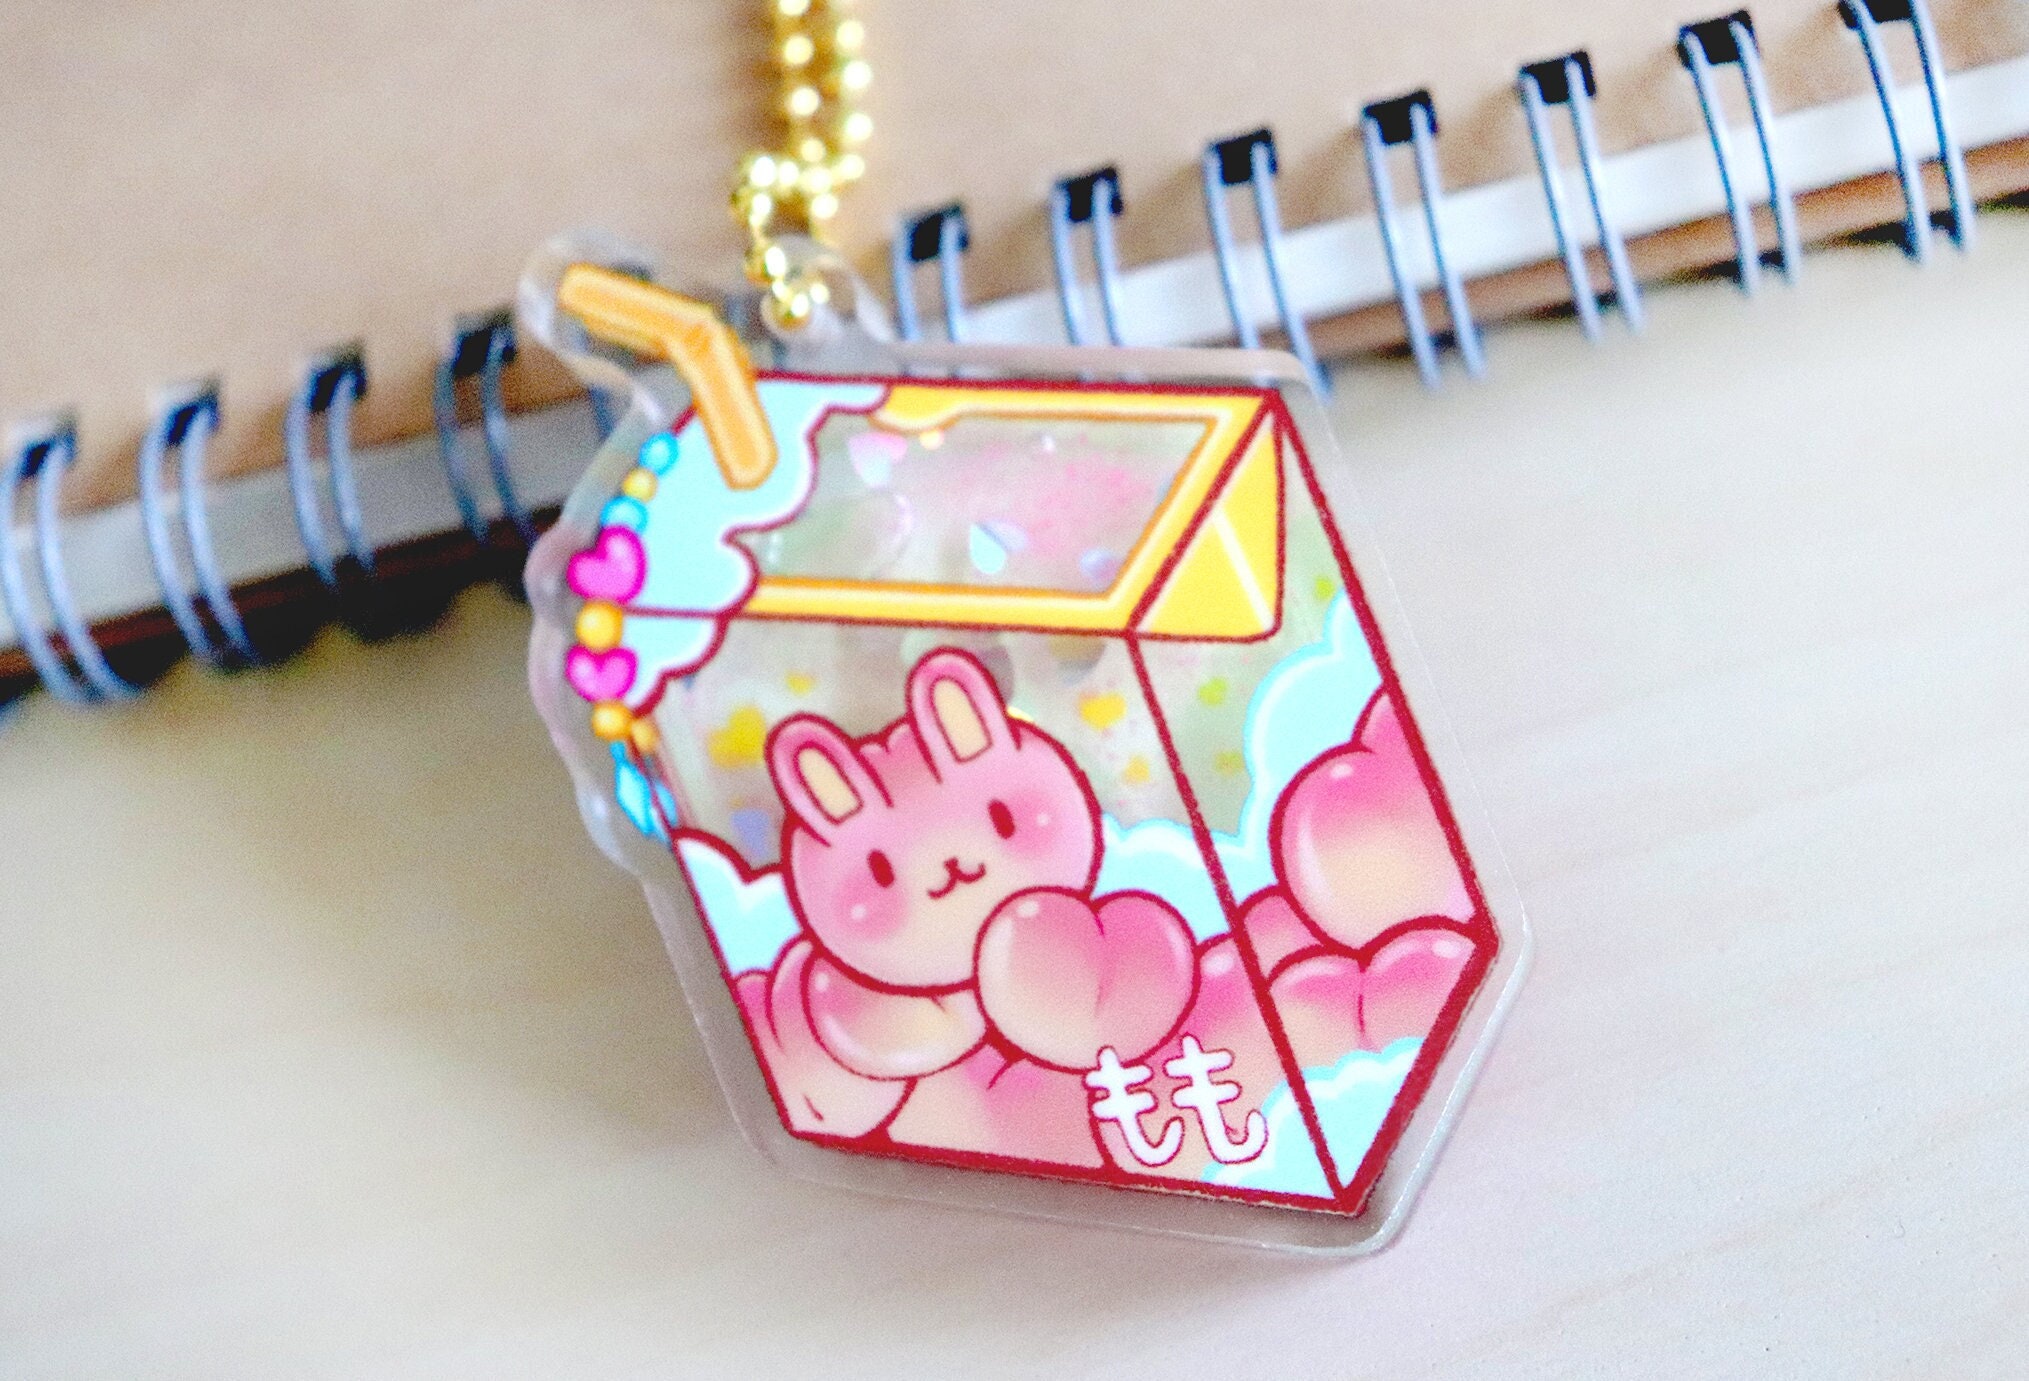 Lovely Peach Milk Key Chain PN2868  Cute keychain, Keychain, Kawaii  accessories